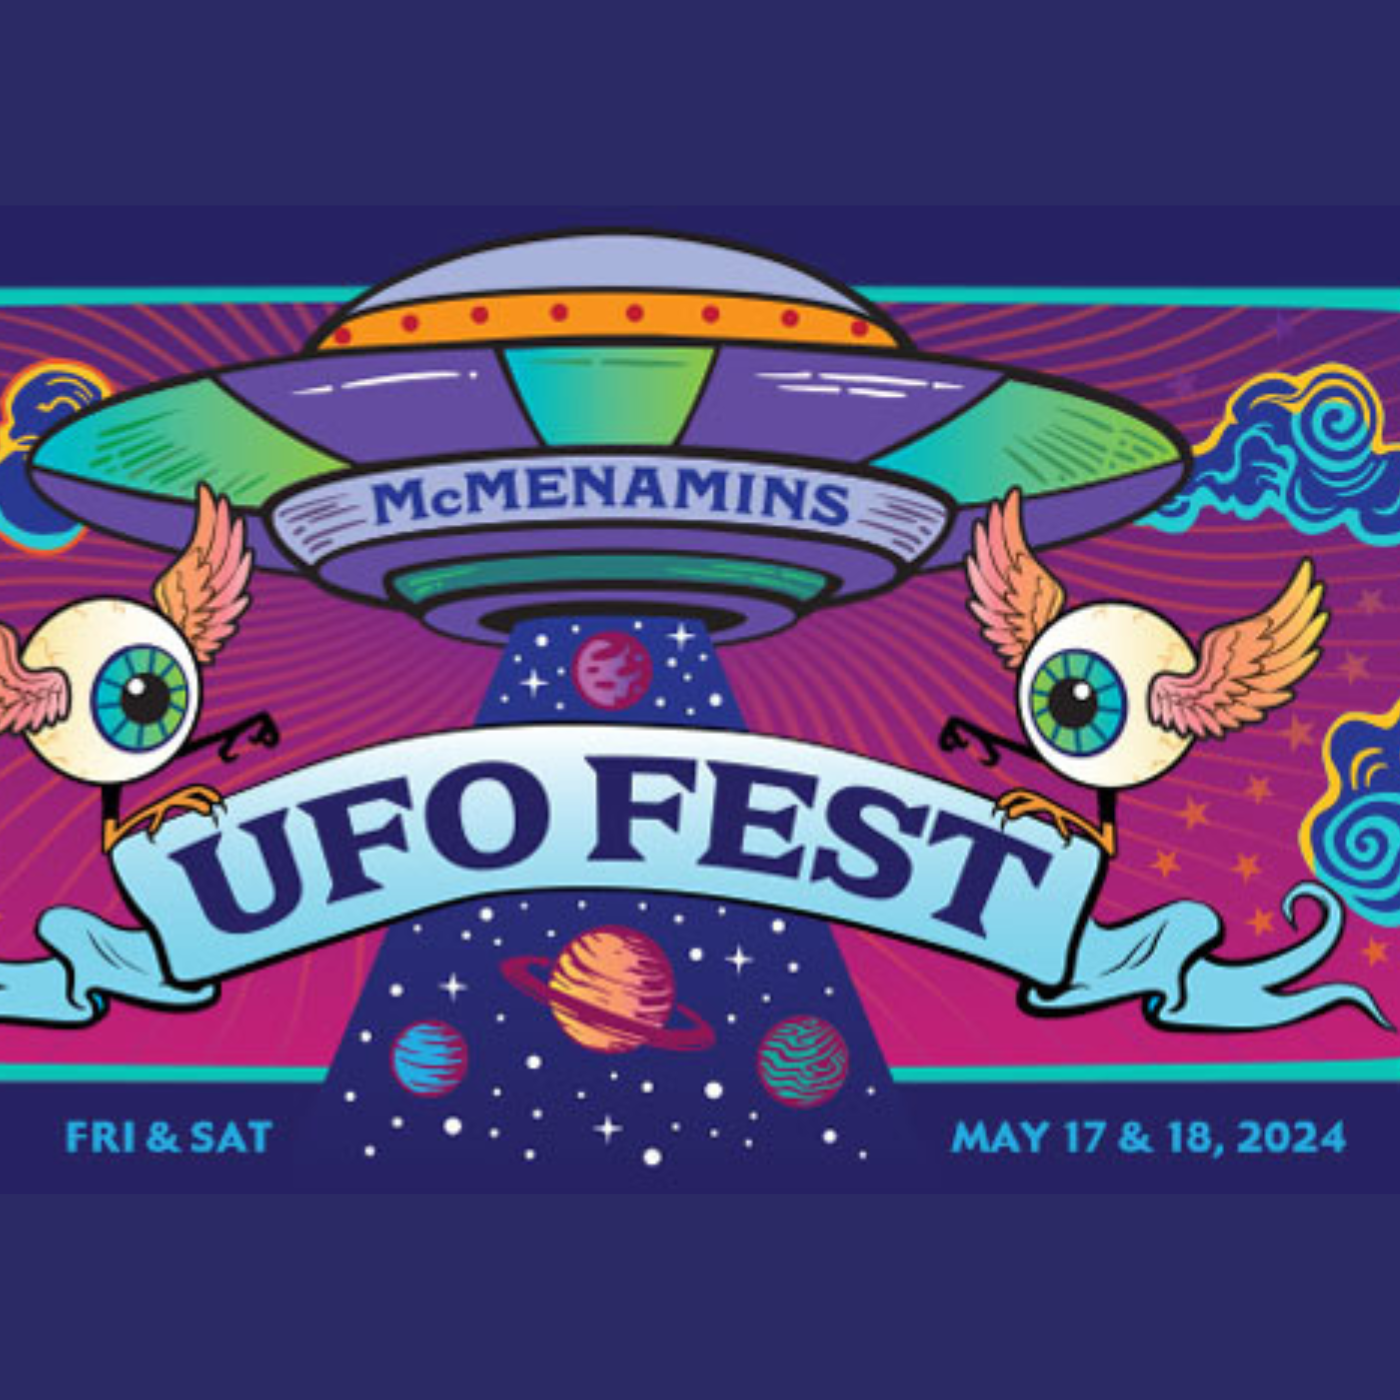 Ep. #689: MCMENAMINS UFO FEST 2024